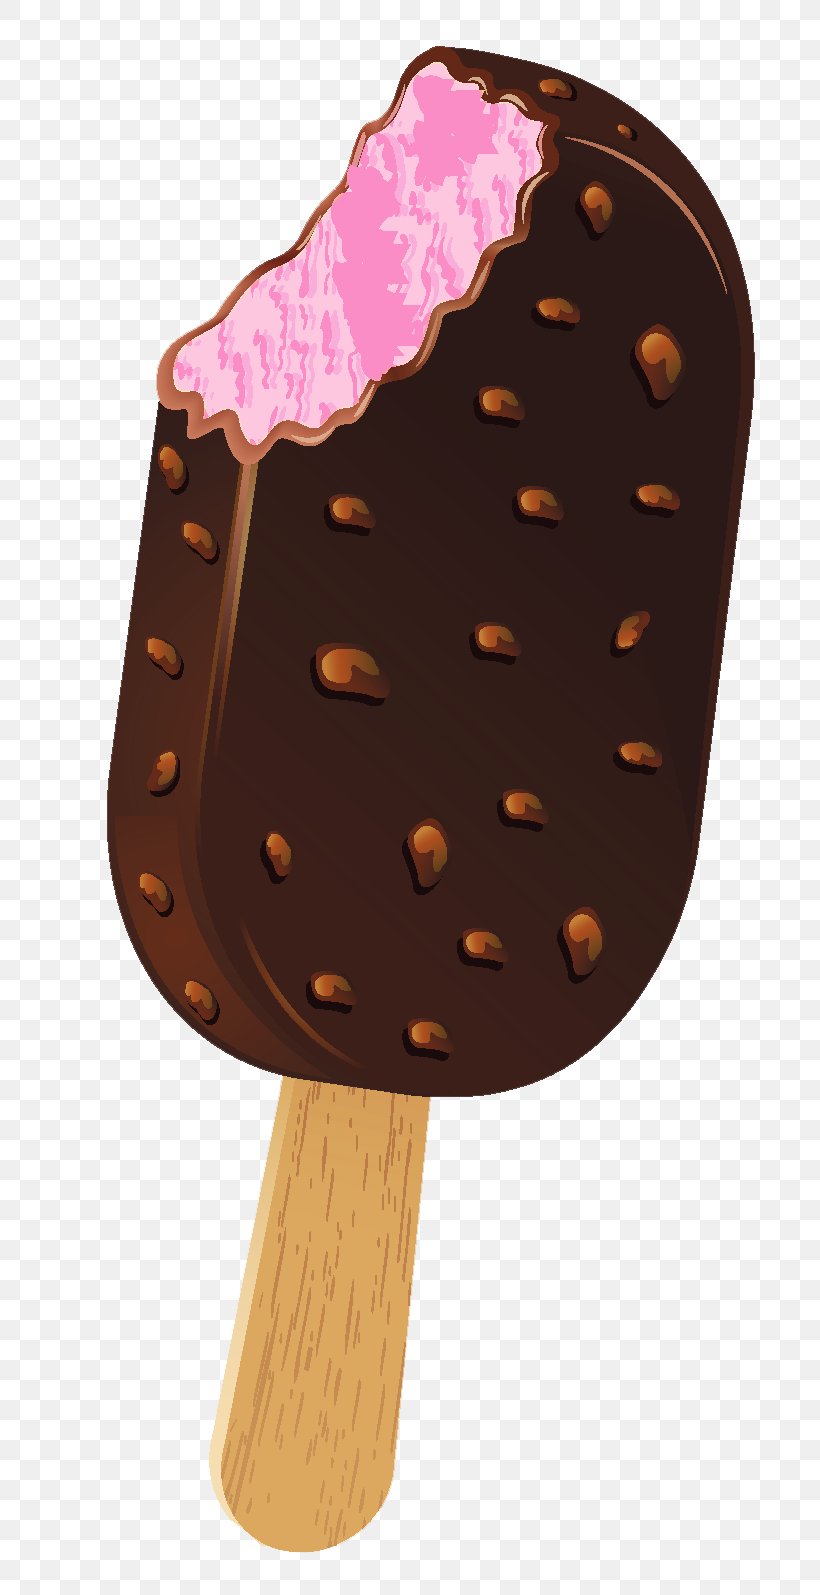 Ice Cream Cone Clip Art, PNG, 813x1595px, Ice Cream, Candy, Chocolate, Chocolate Bar, Chocolate Ice Cream Download Free